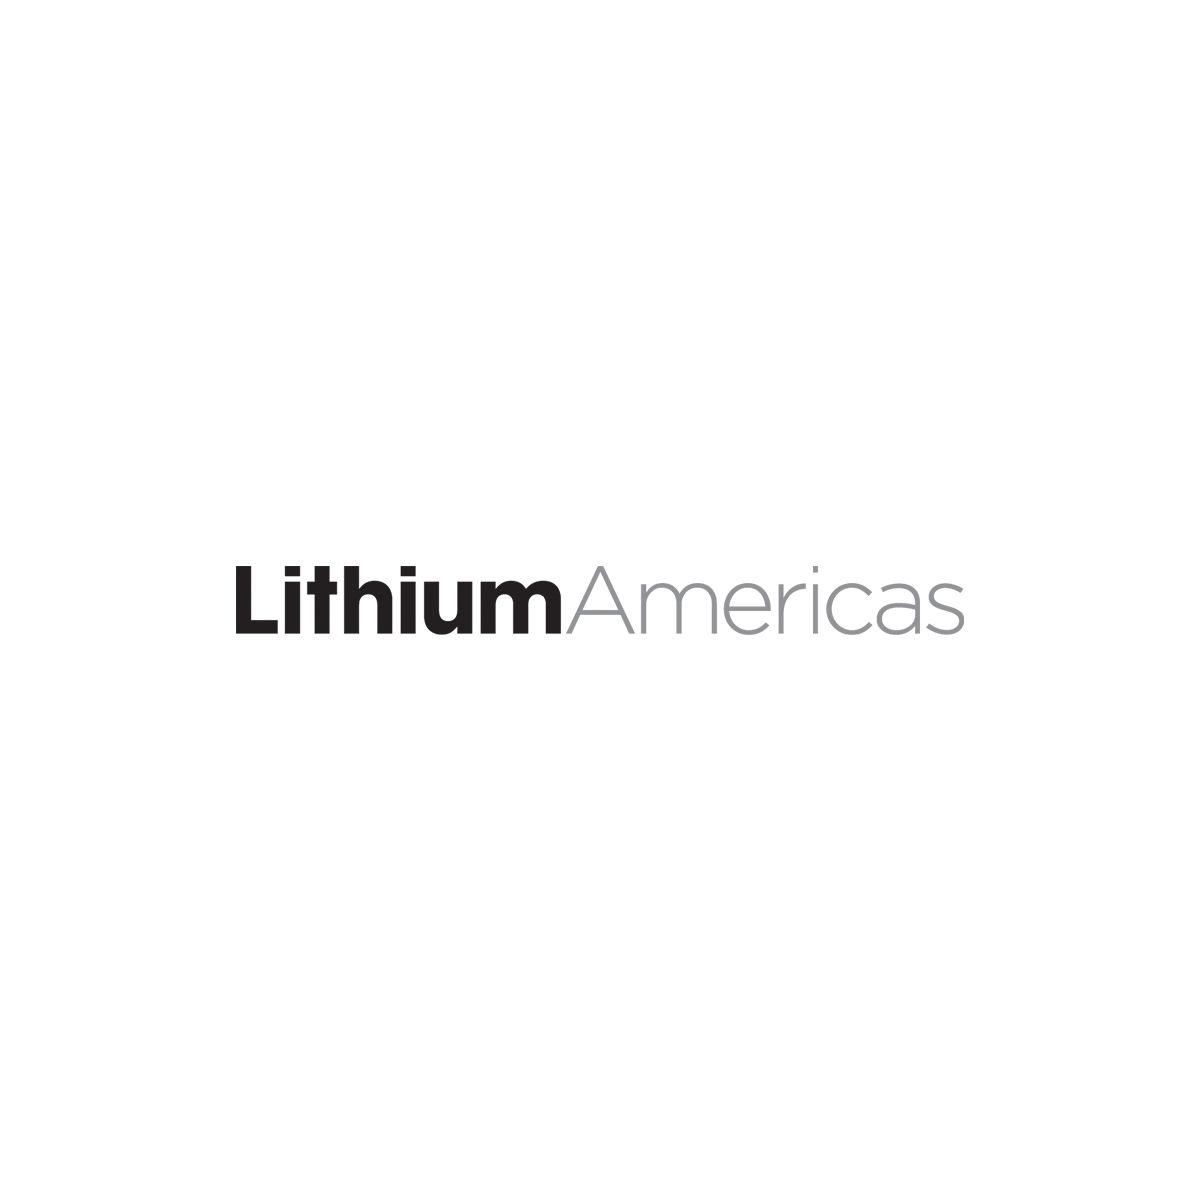 Americas Logo - Lithium Americas